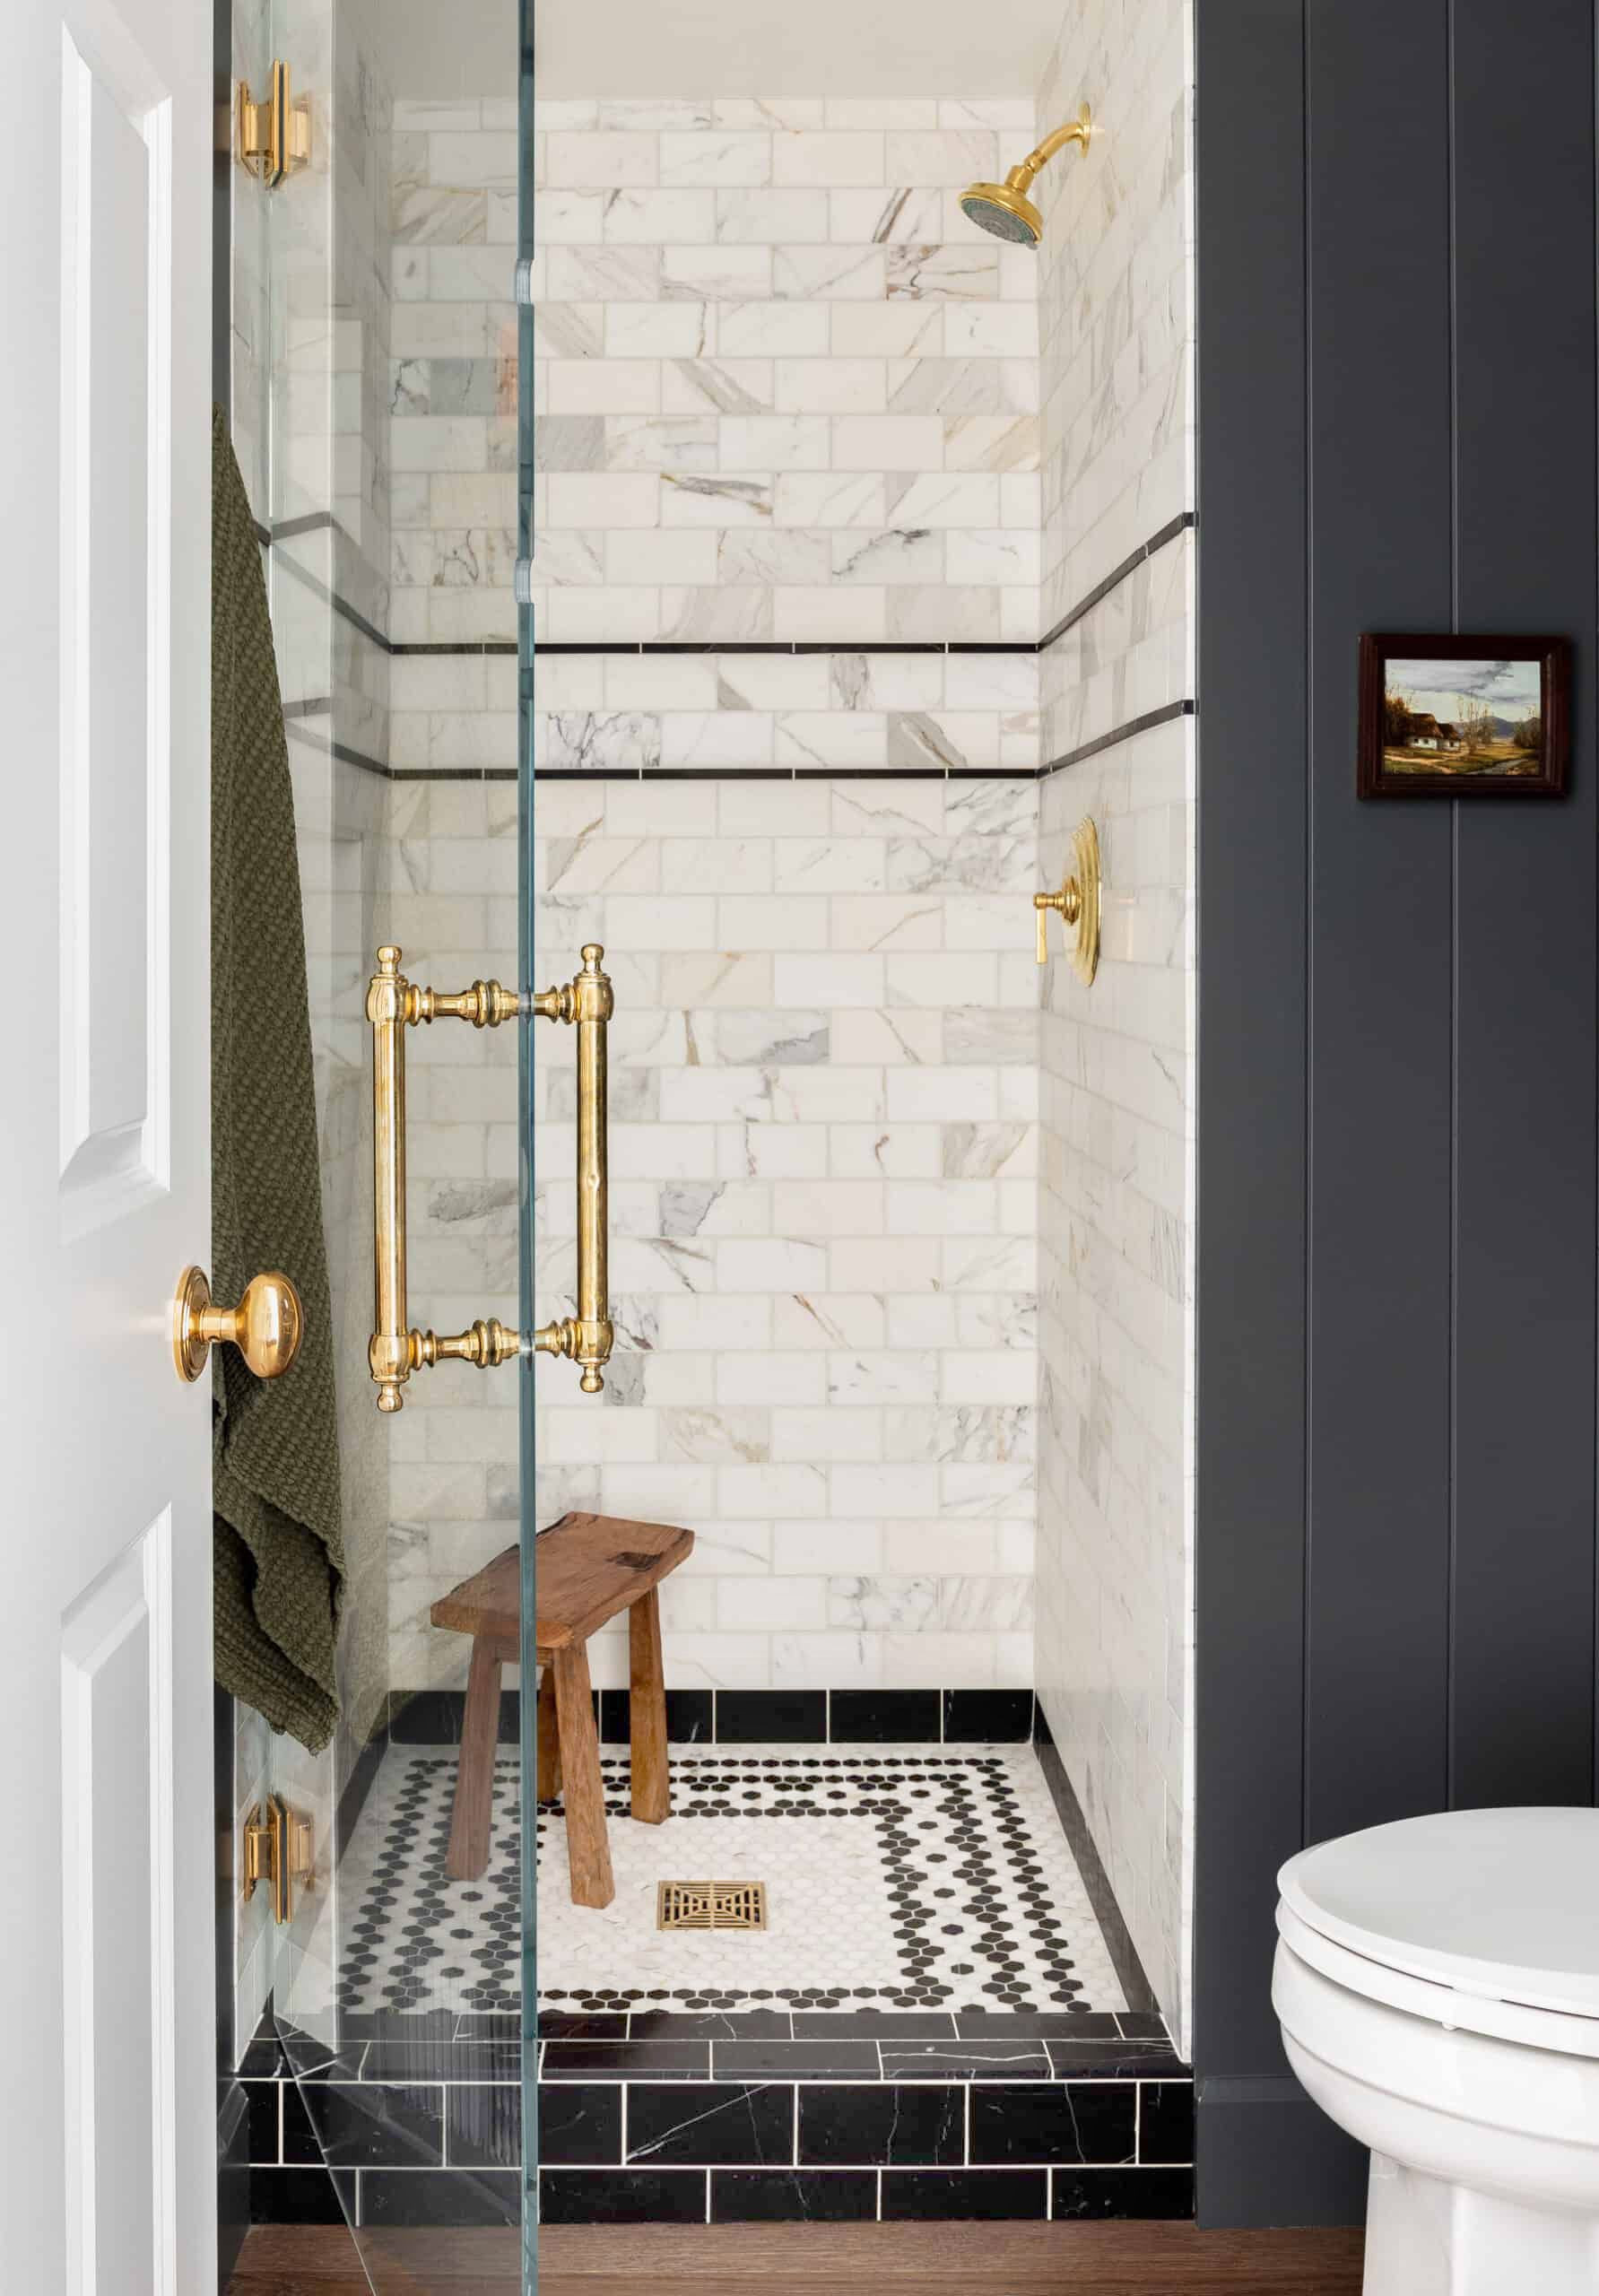 Bathroom Tile Ideas - Bath Tile Backsplash and Floor Designs